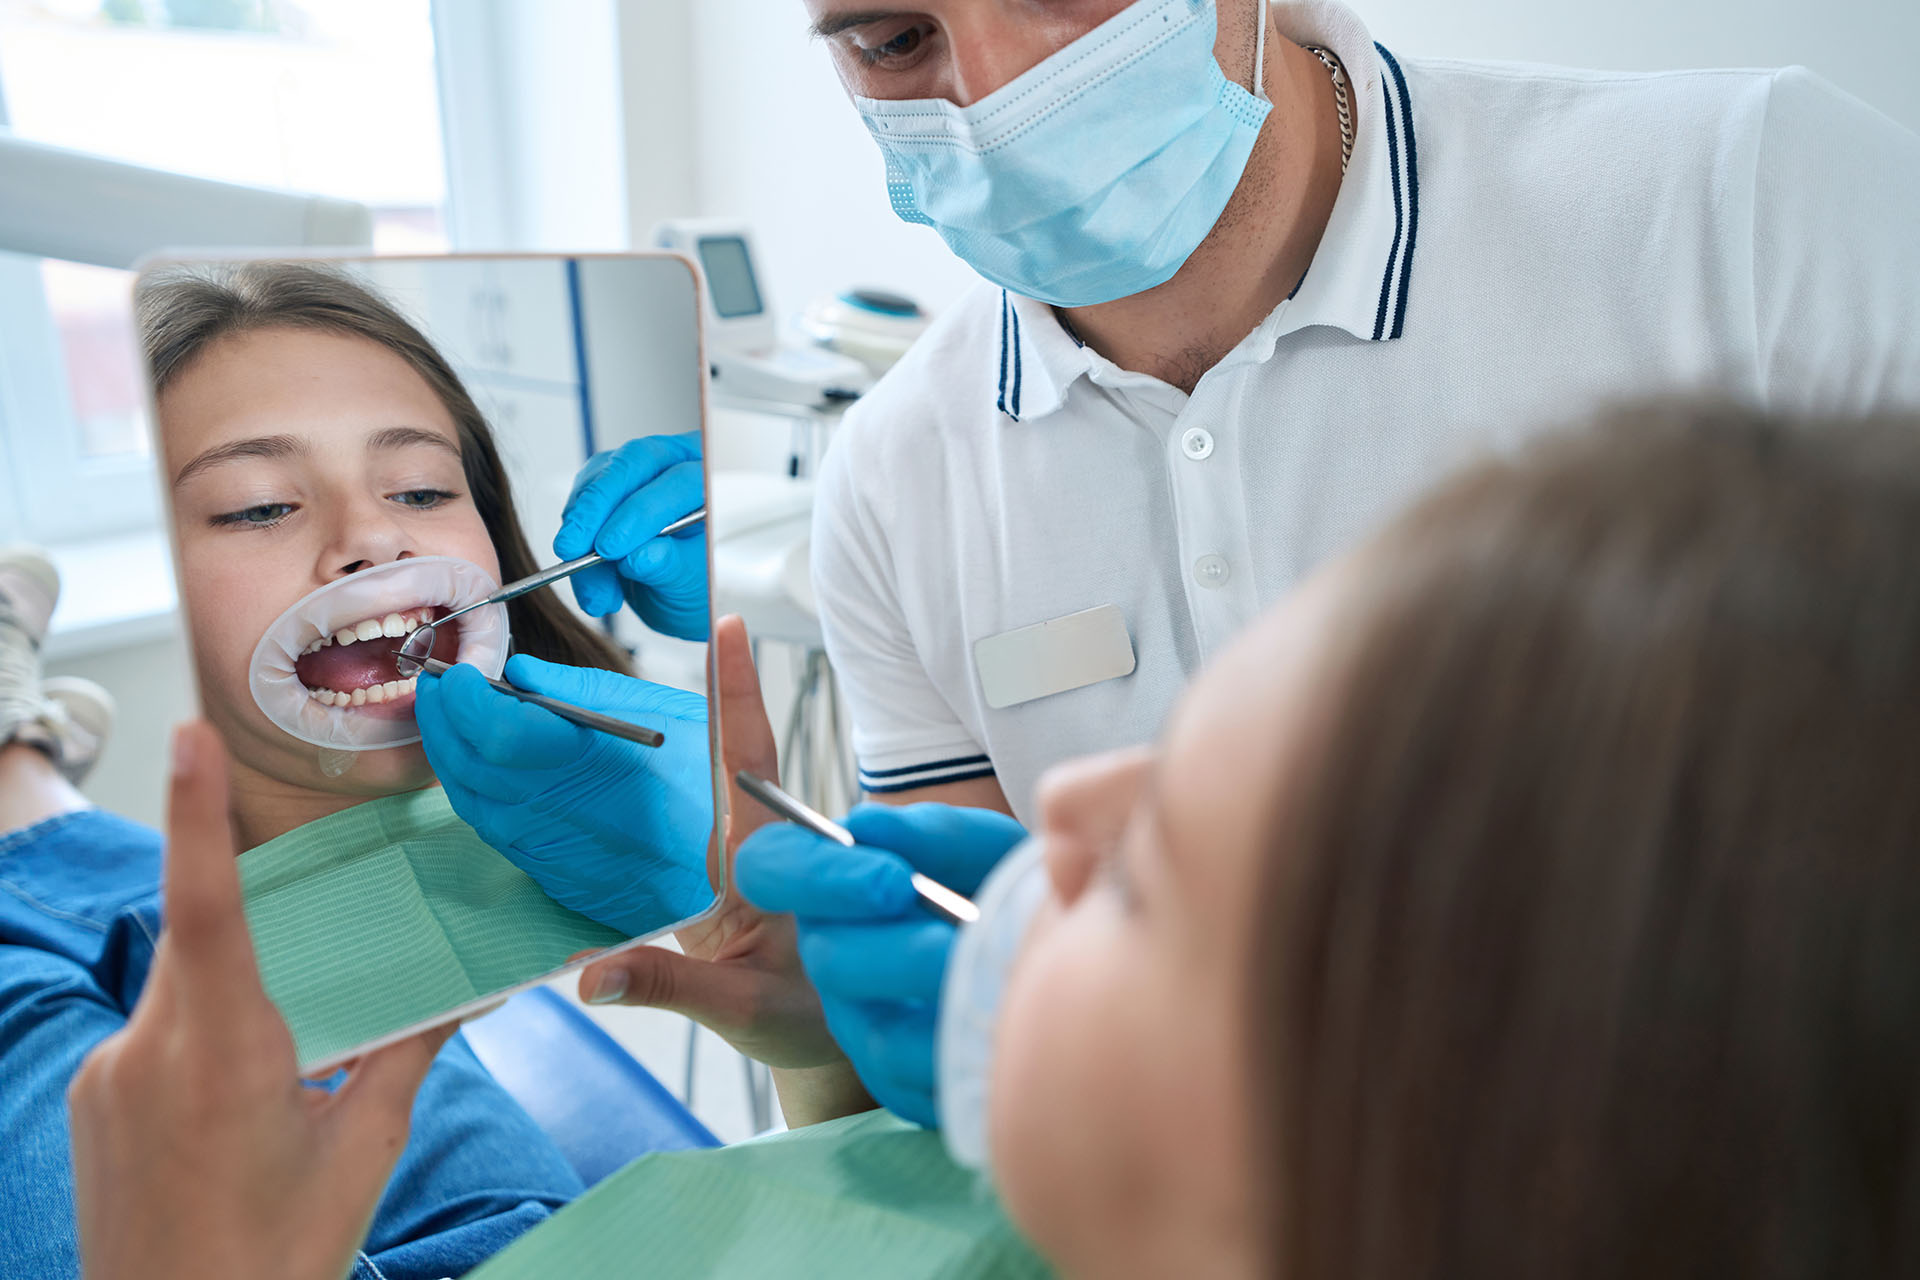 Clínica Dental Andrea Compte, tu Centro Odontológico especializado. Odontopediatría en Sant Jordi. Dentista pediátrico realizando un examen dental de un paciente.